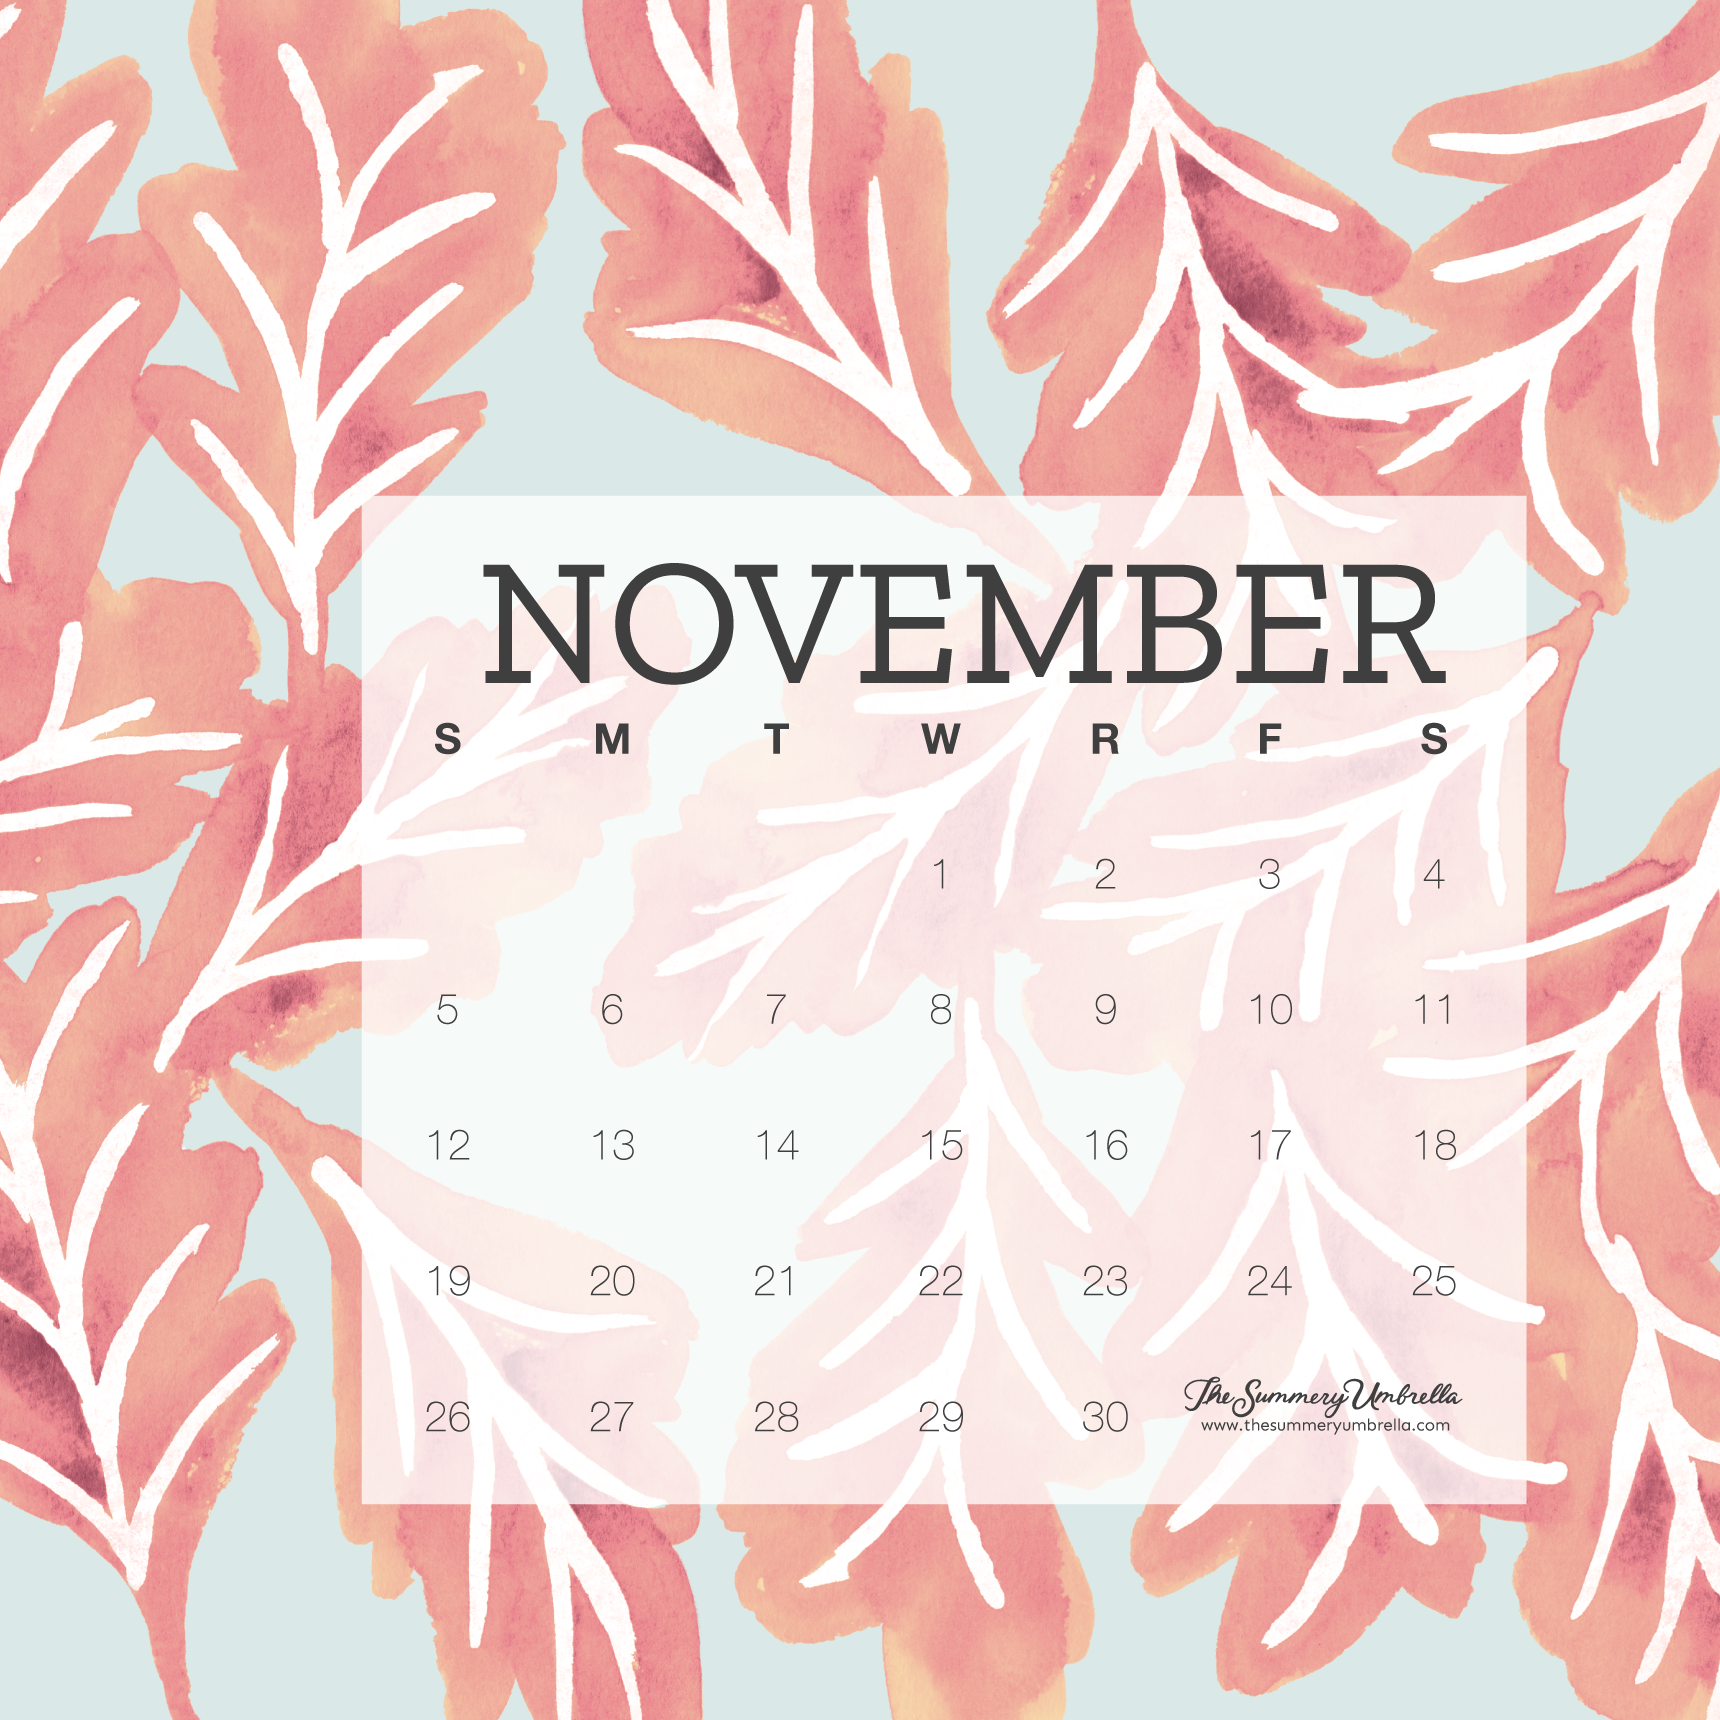 Get Your Free Downloadable November Calendar Now!